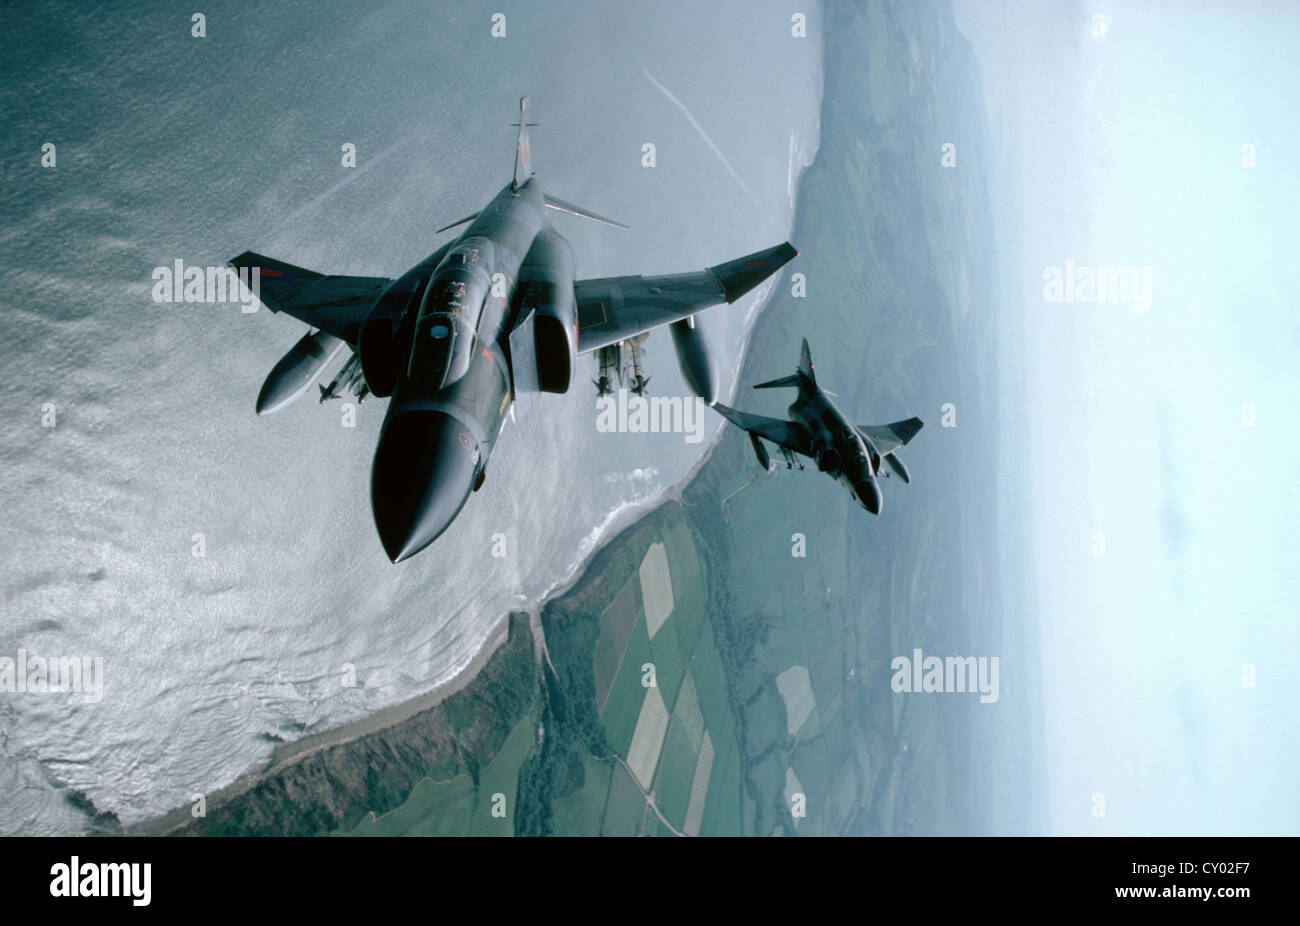 RAF Phantom flying above coast Stock Photo